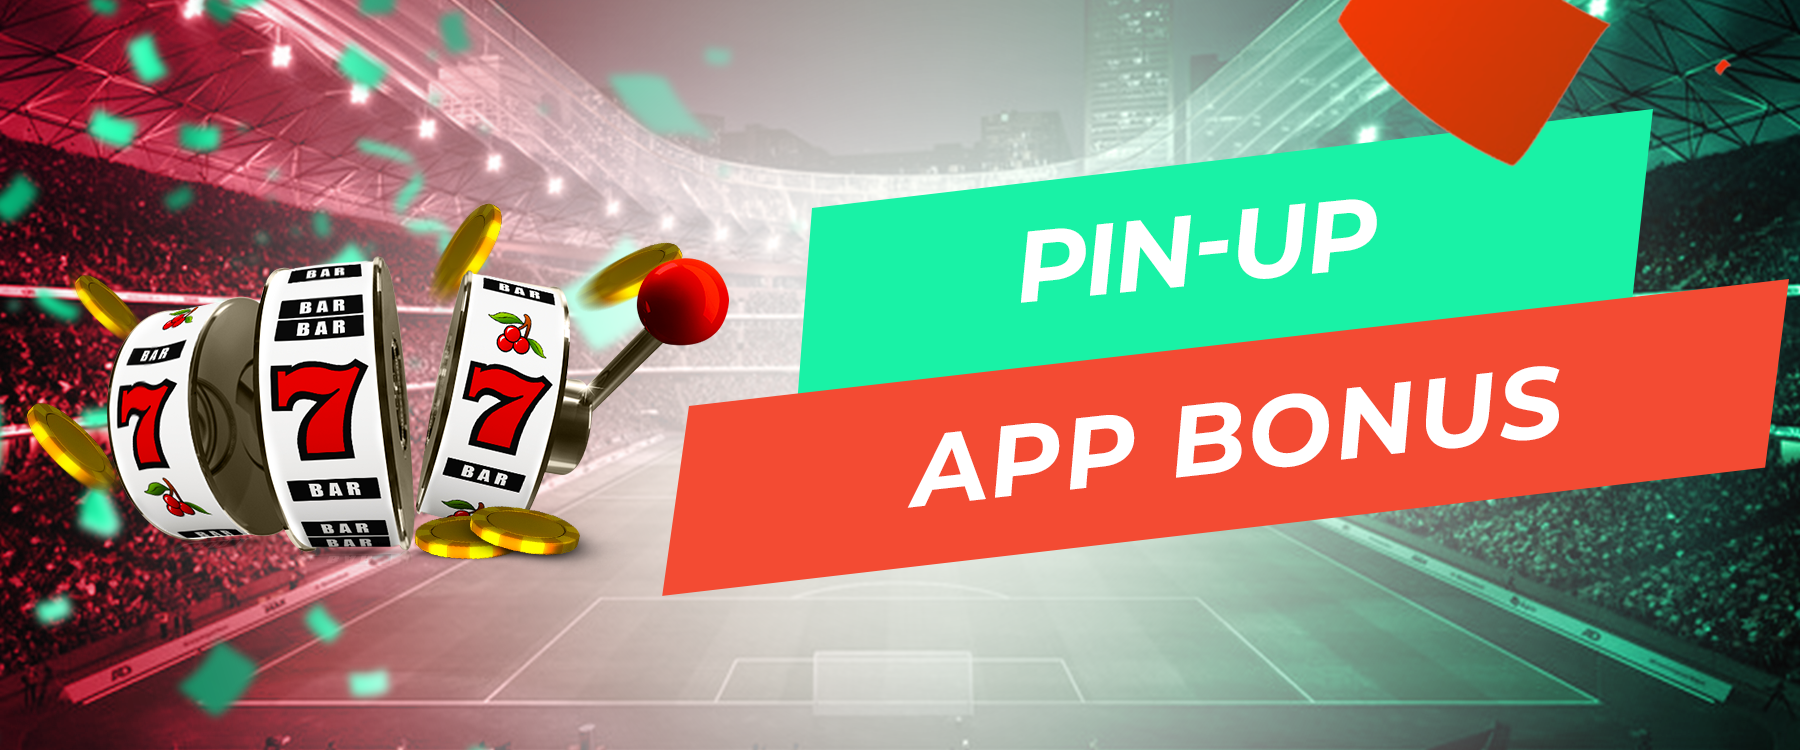 Pin-up App Bonuses